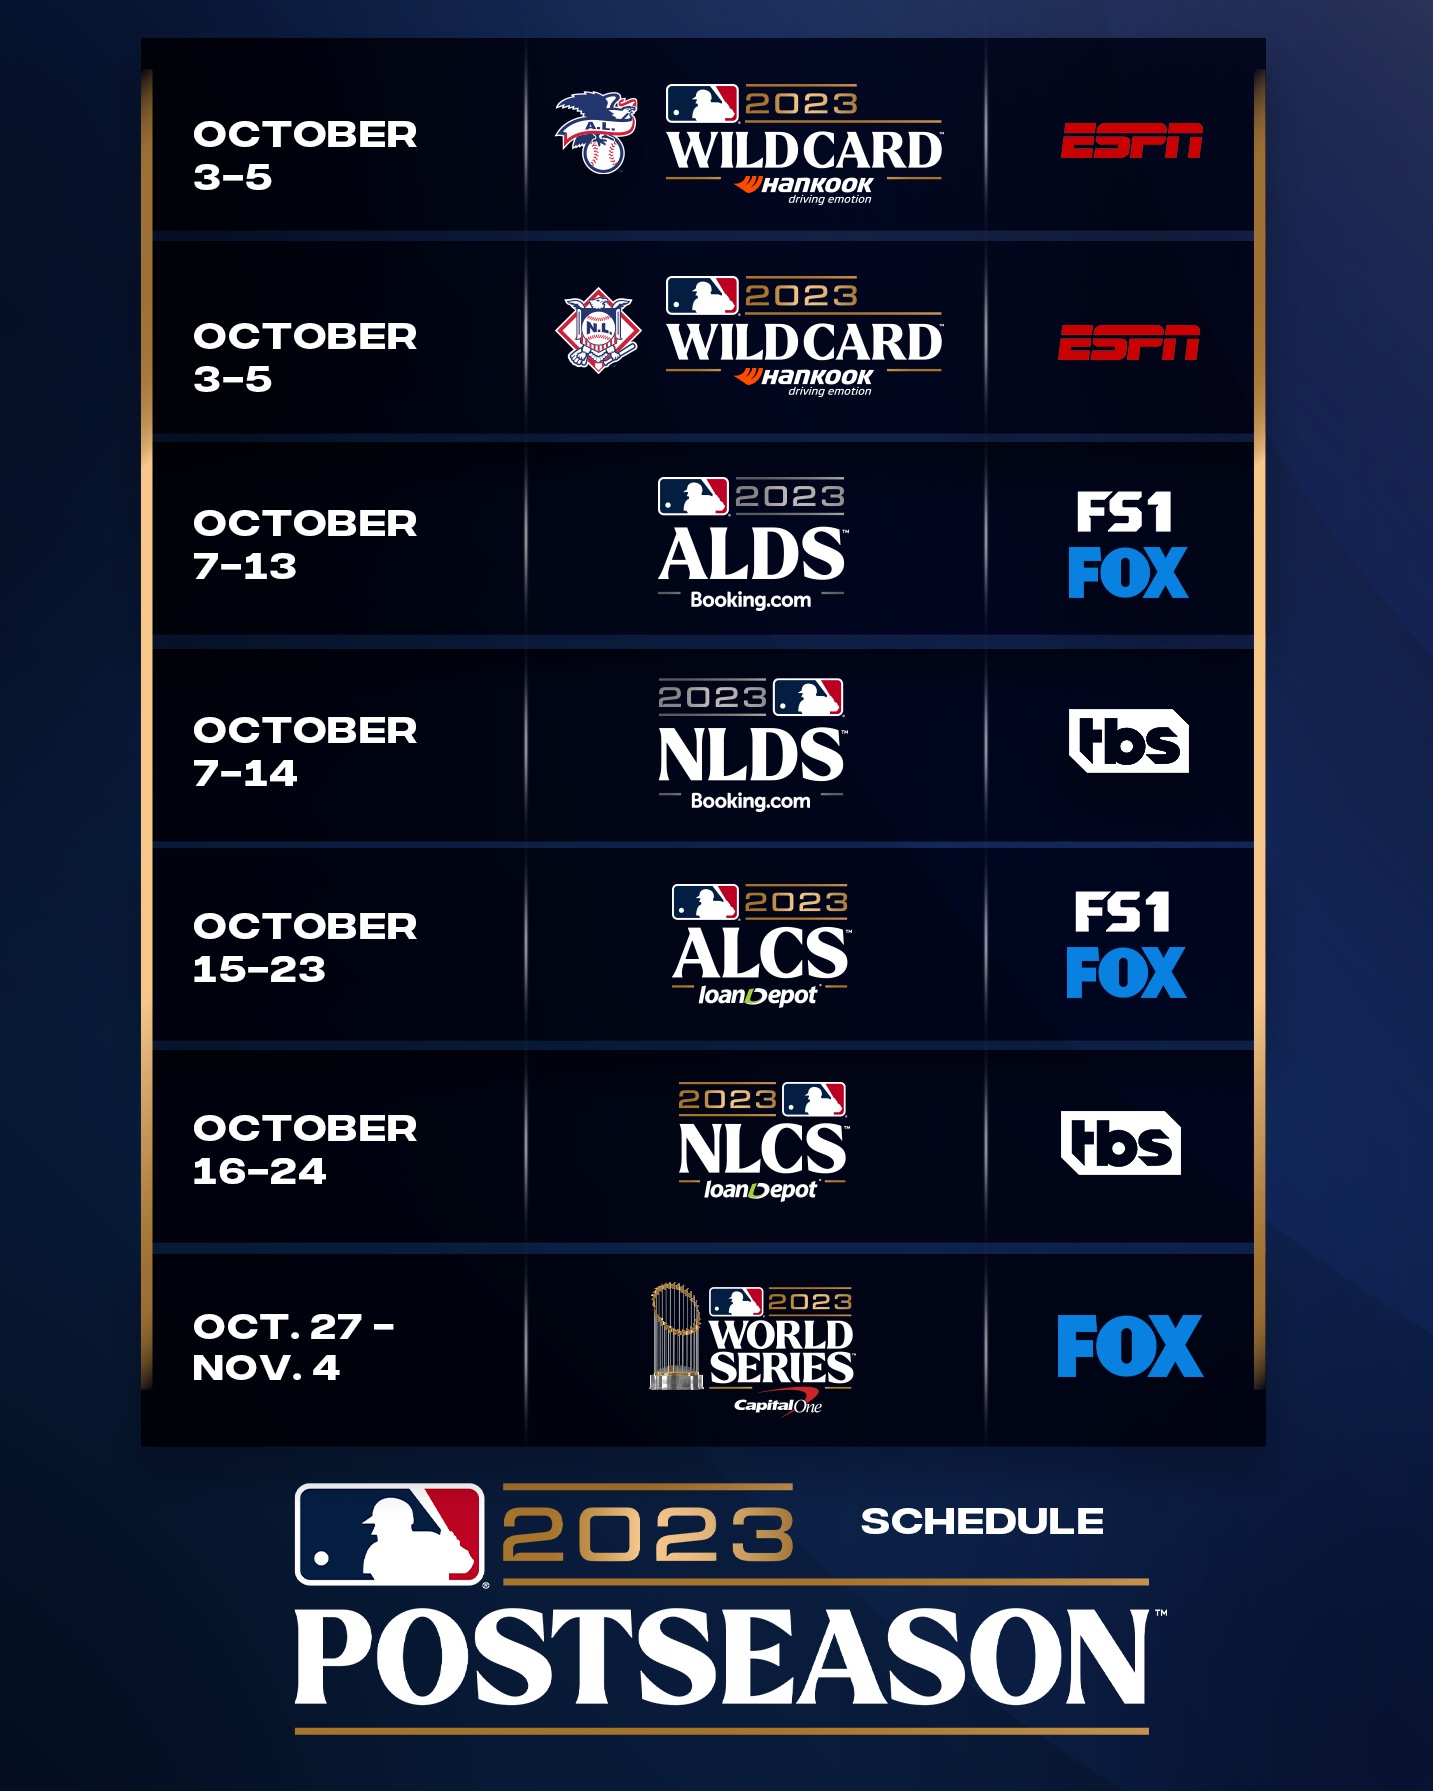 MLB on X: 'Mark your calendars! The 2023 #postseason starts on